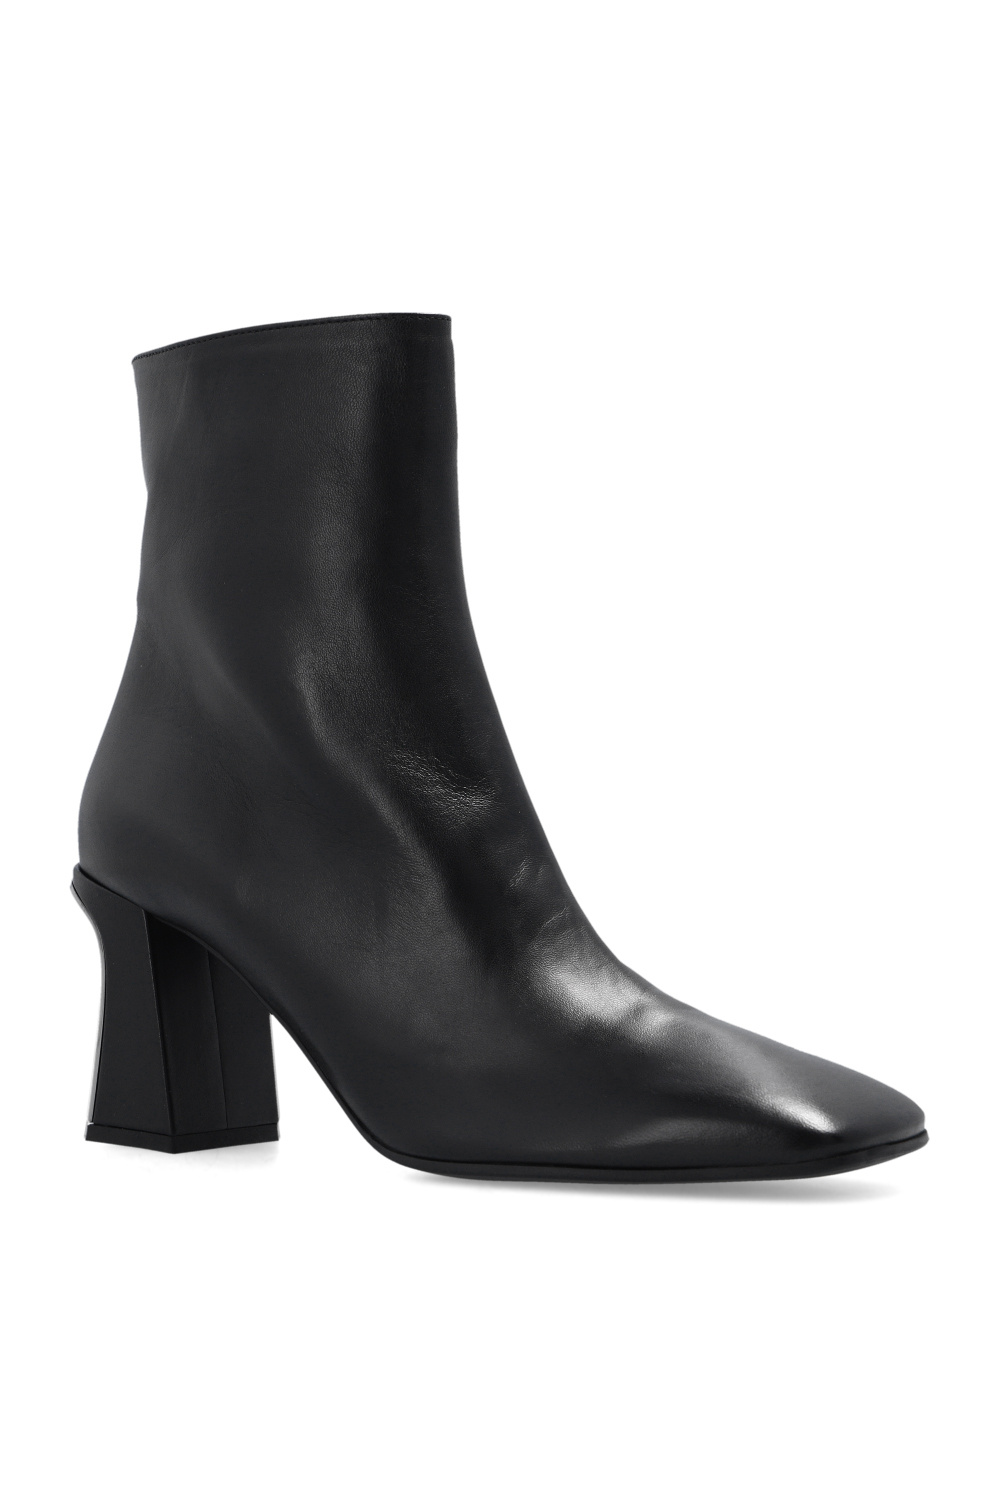 Furla ‘Sirena’ heeled ankle Tecnologias boots